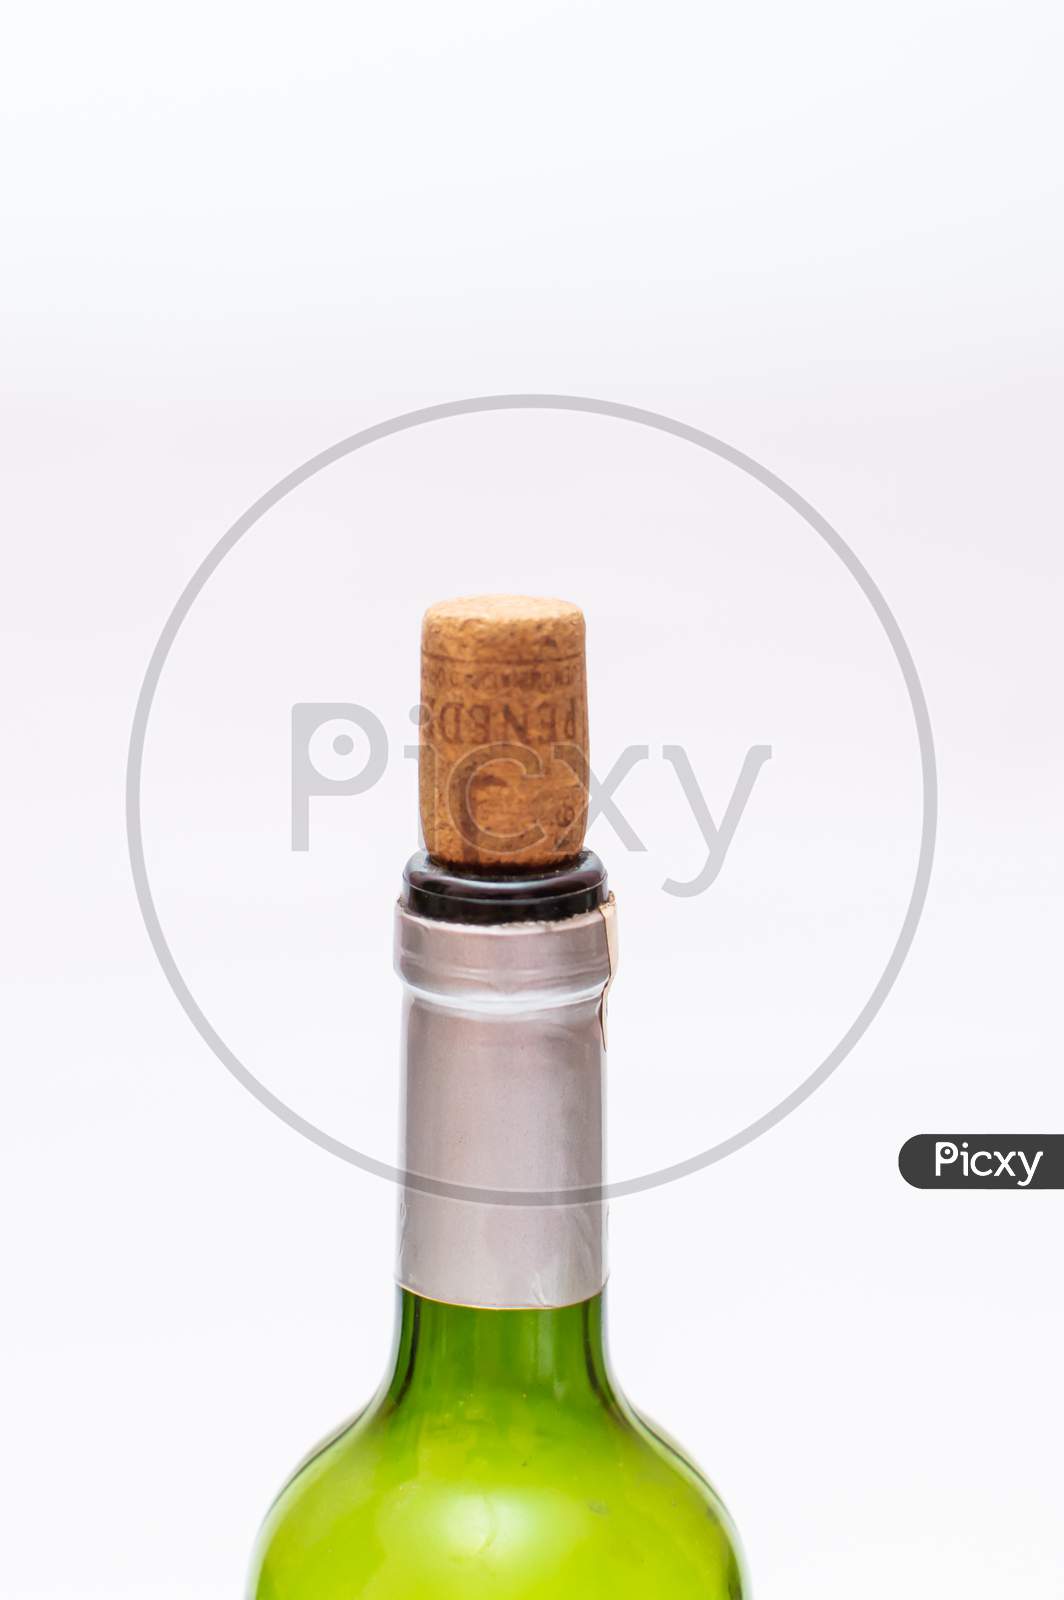 Cork of bottle of wine on the bottle